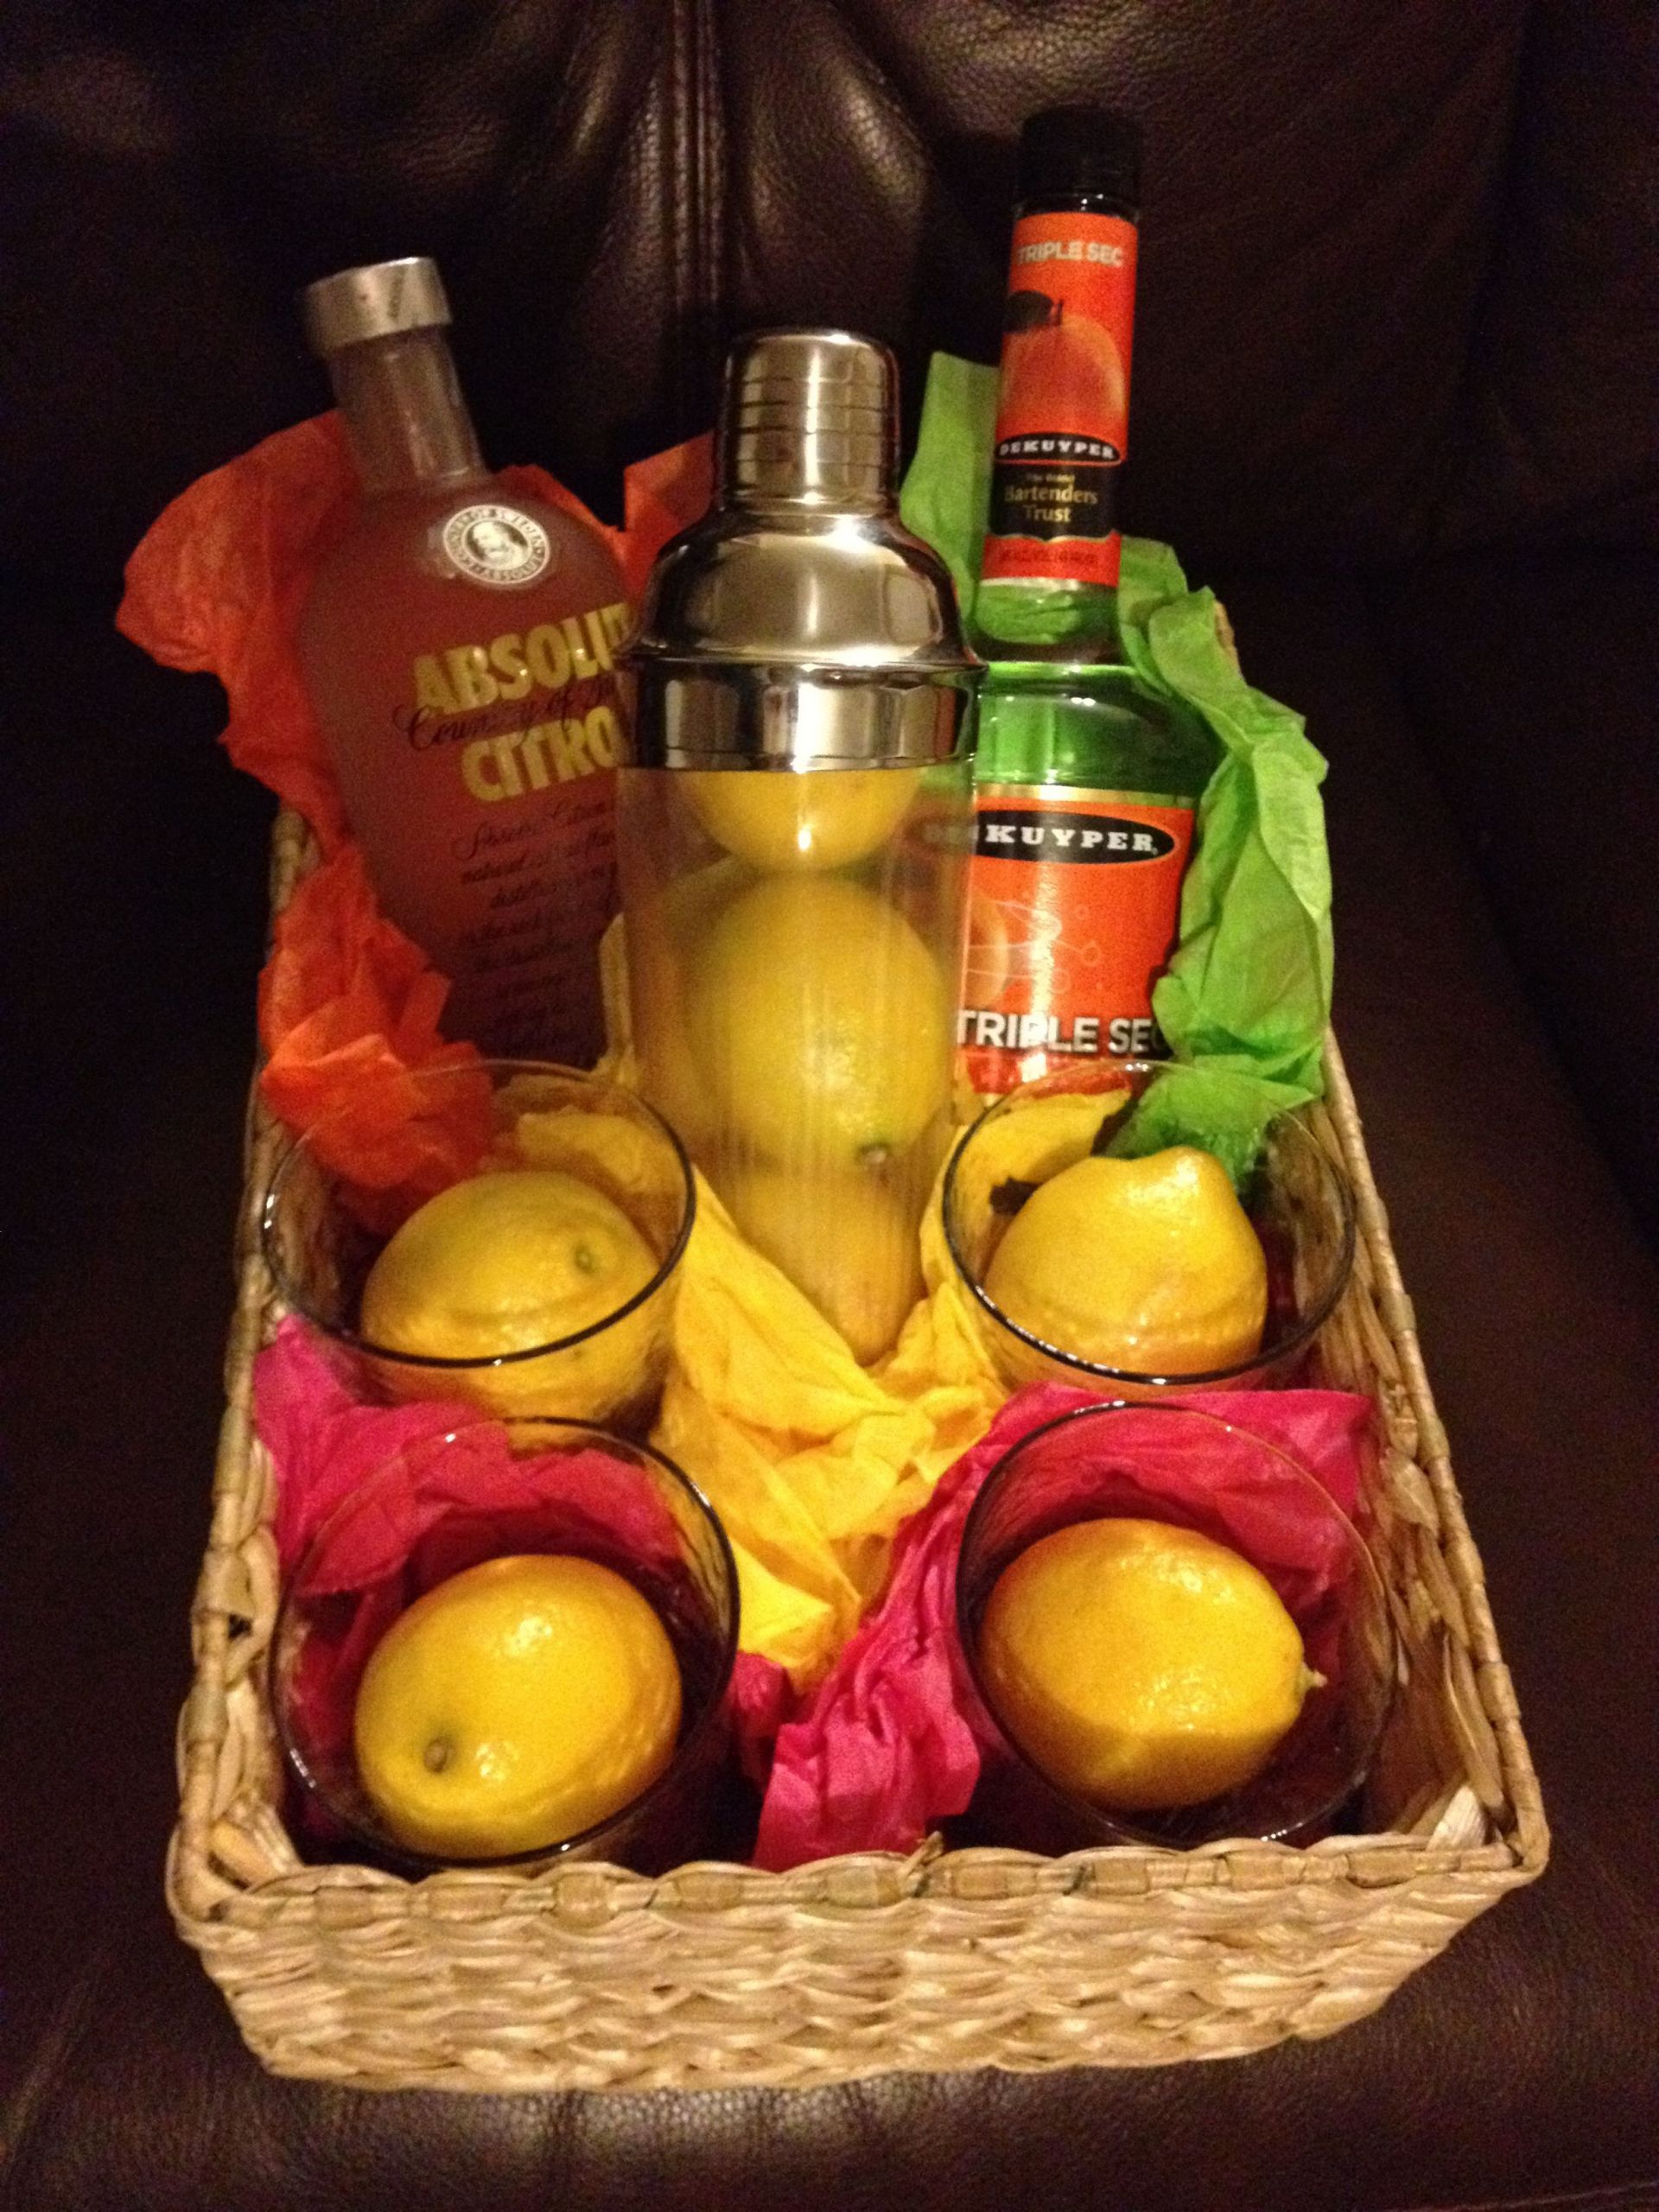 Martini Gift Basket Ideas
 Lemon drop martini t basket yummy